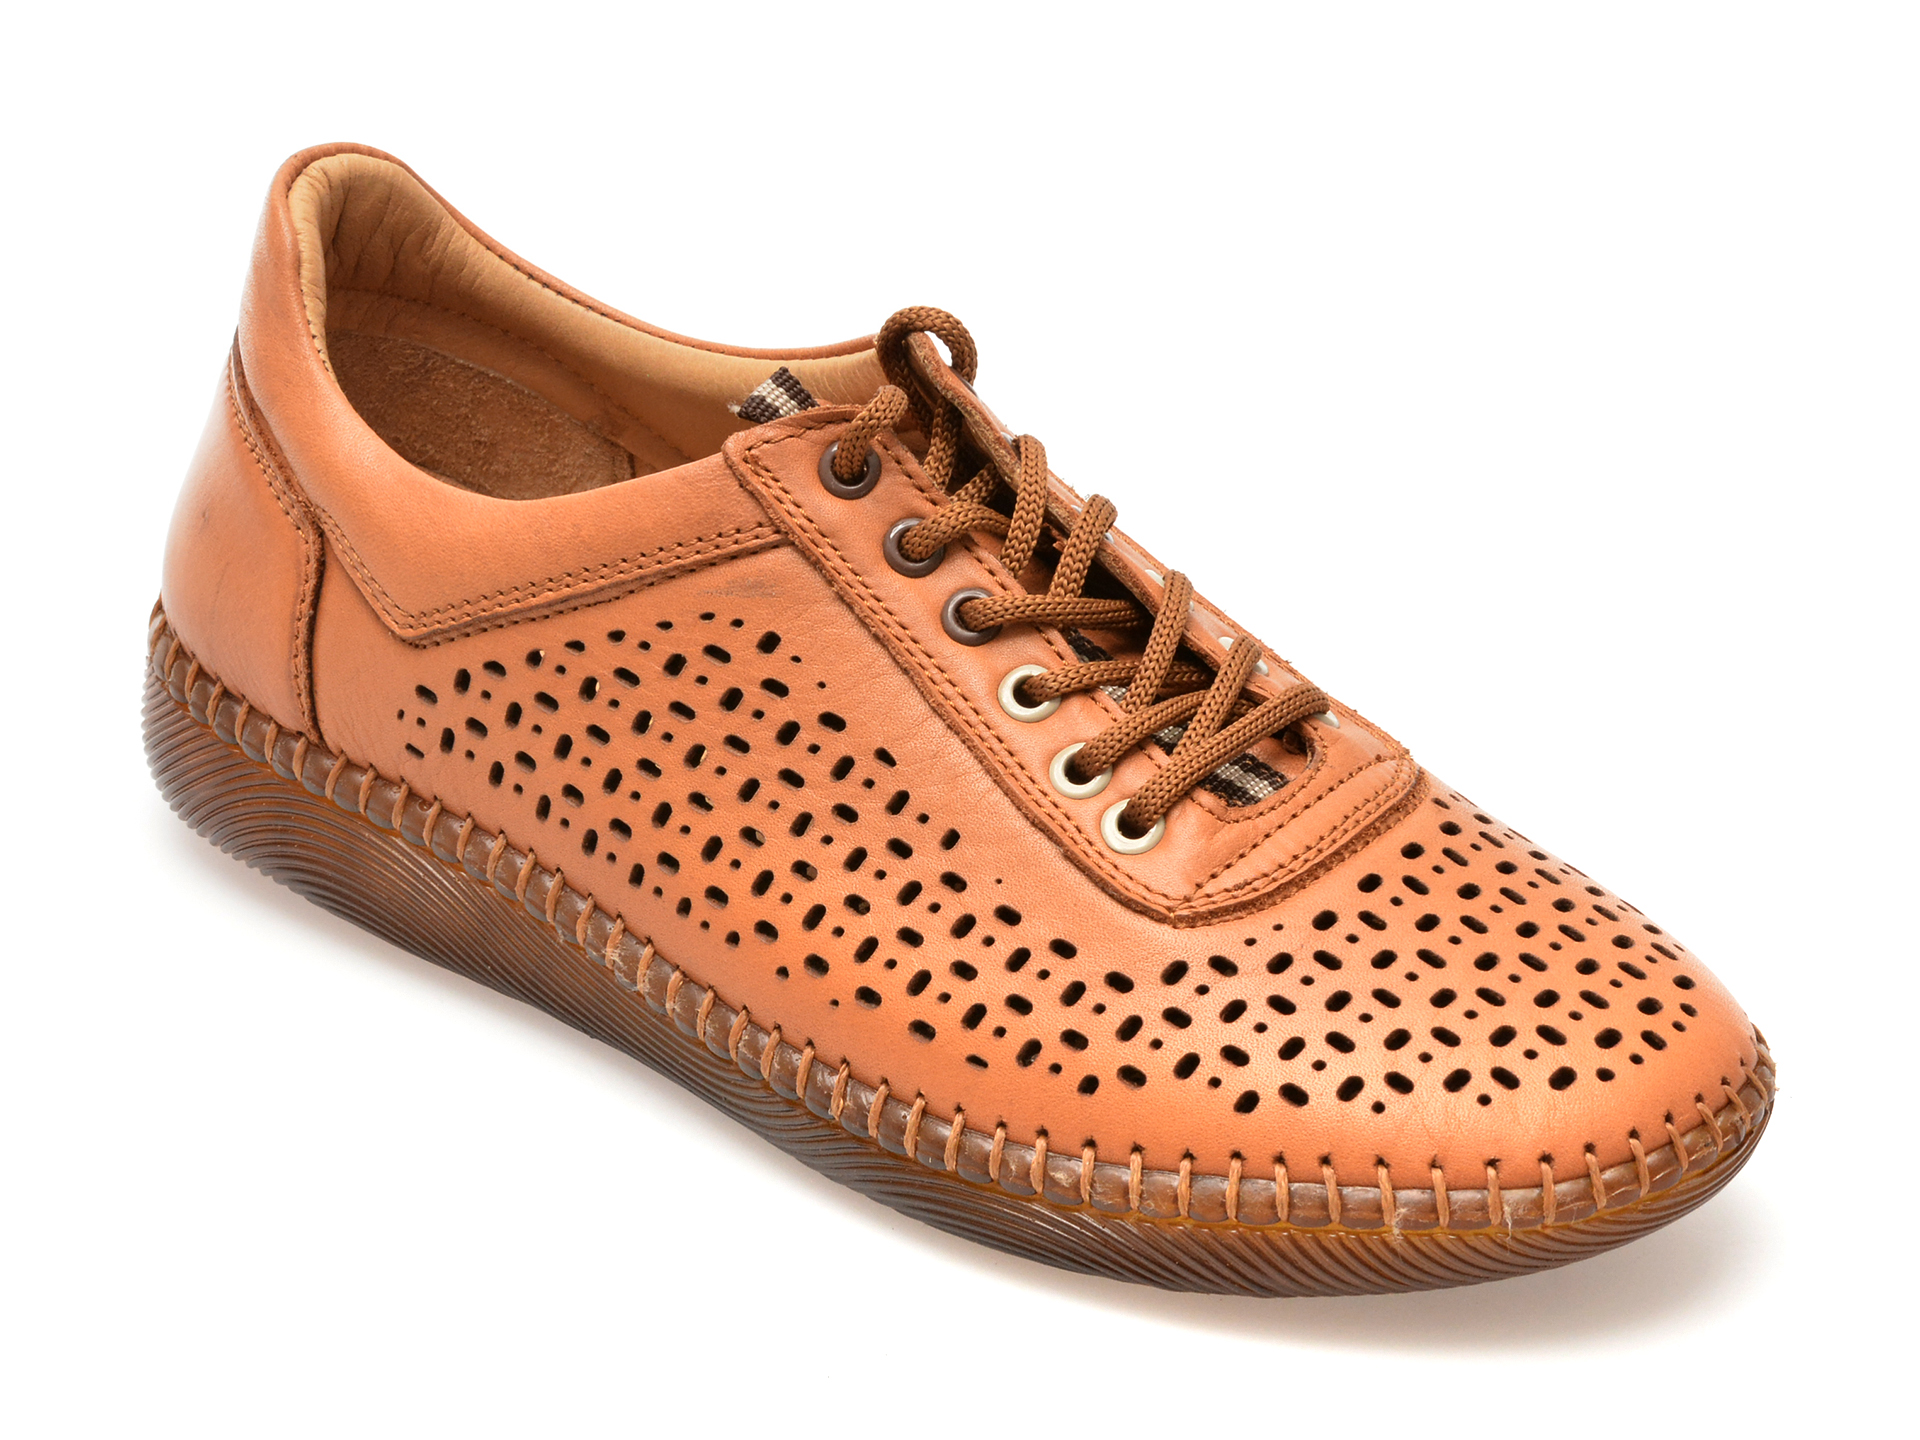 Pantofi casual OZIYS maro, 22109, din piele naturala